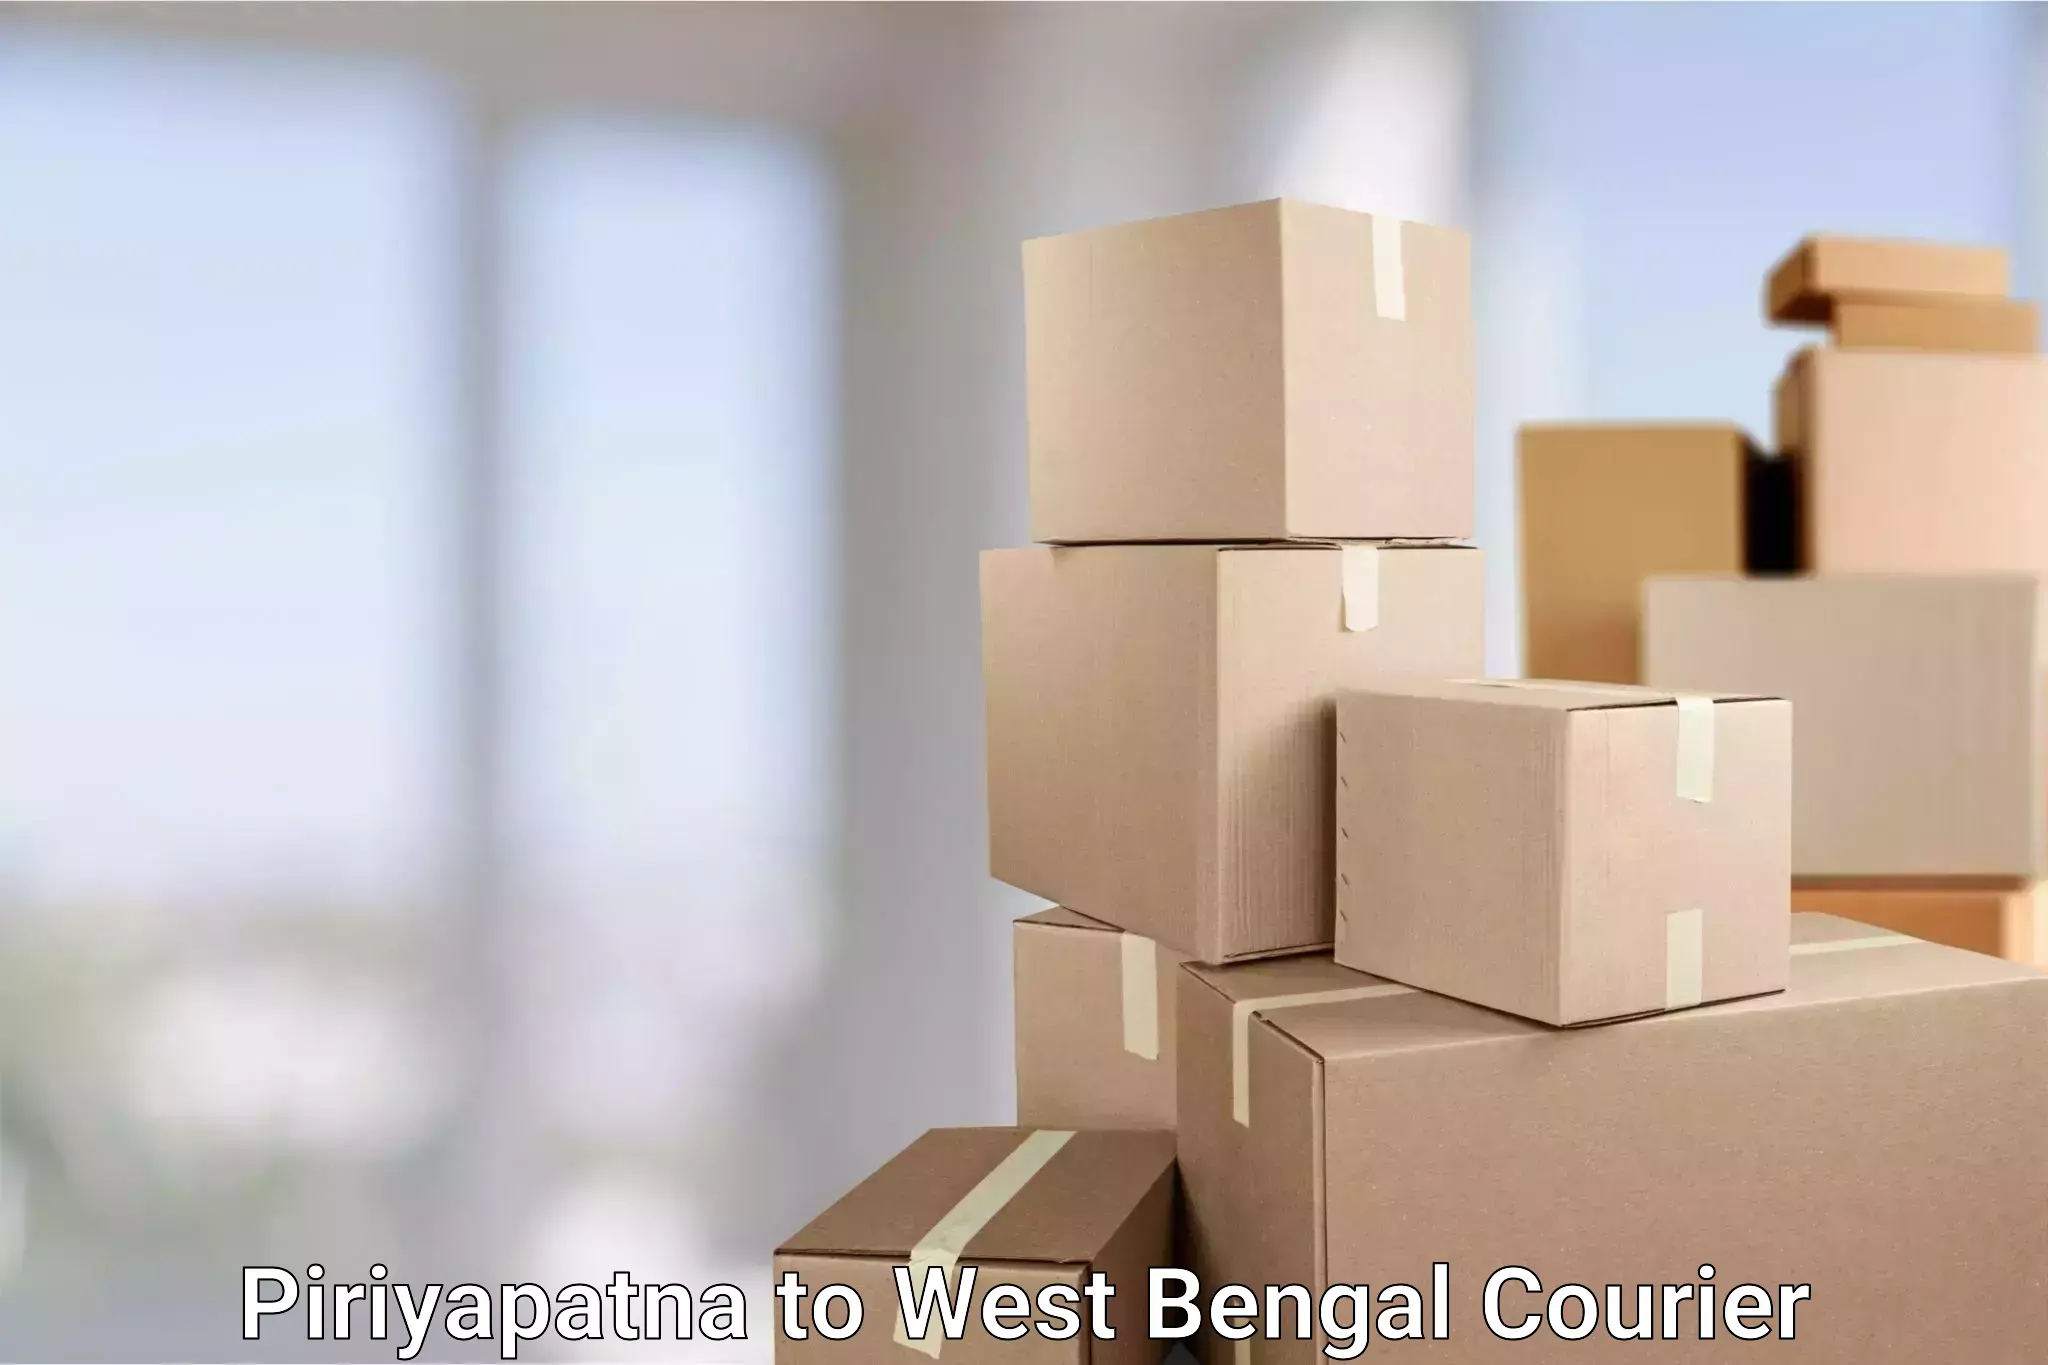 Sustainable courier practices Piriyapatna to Kolkata Port